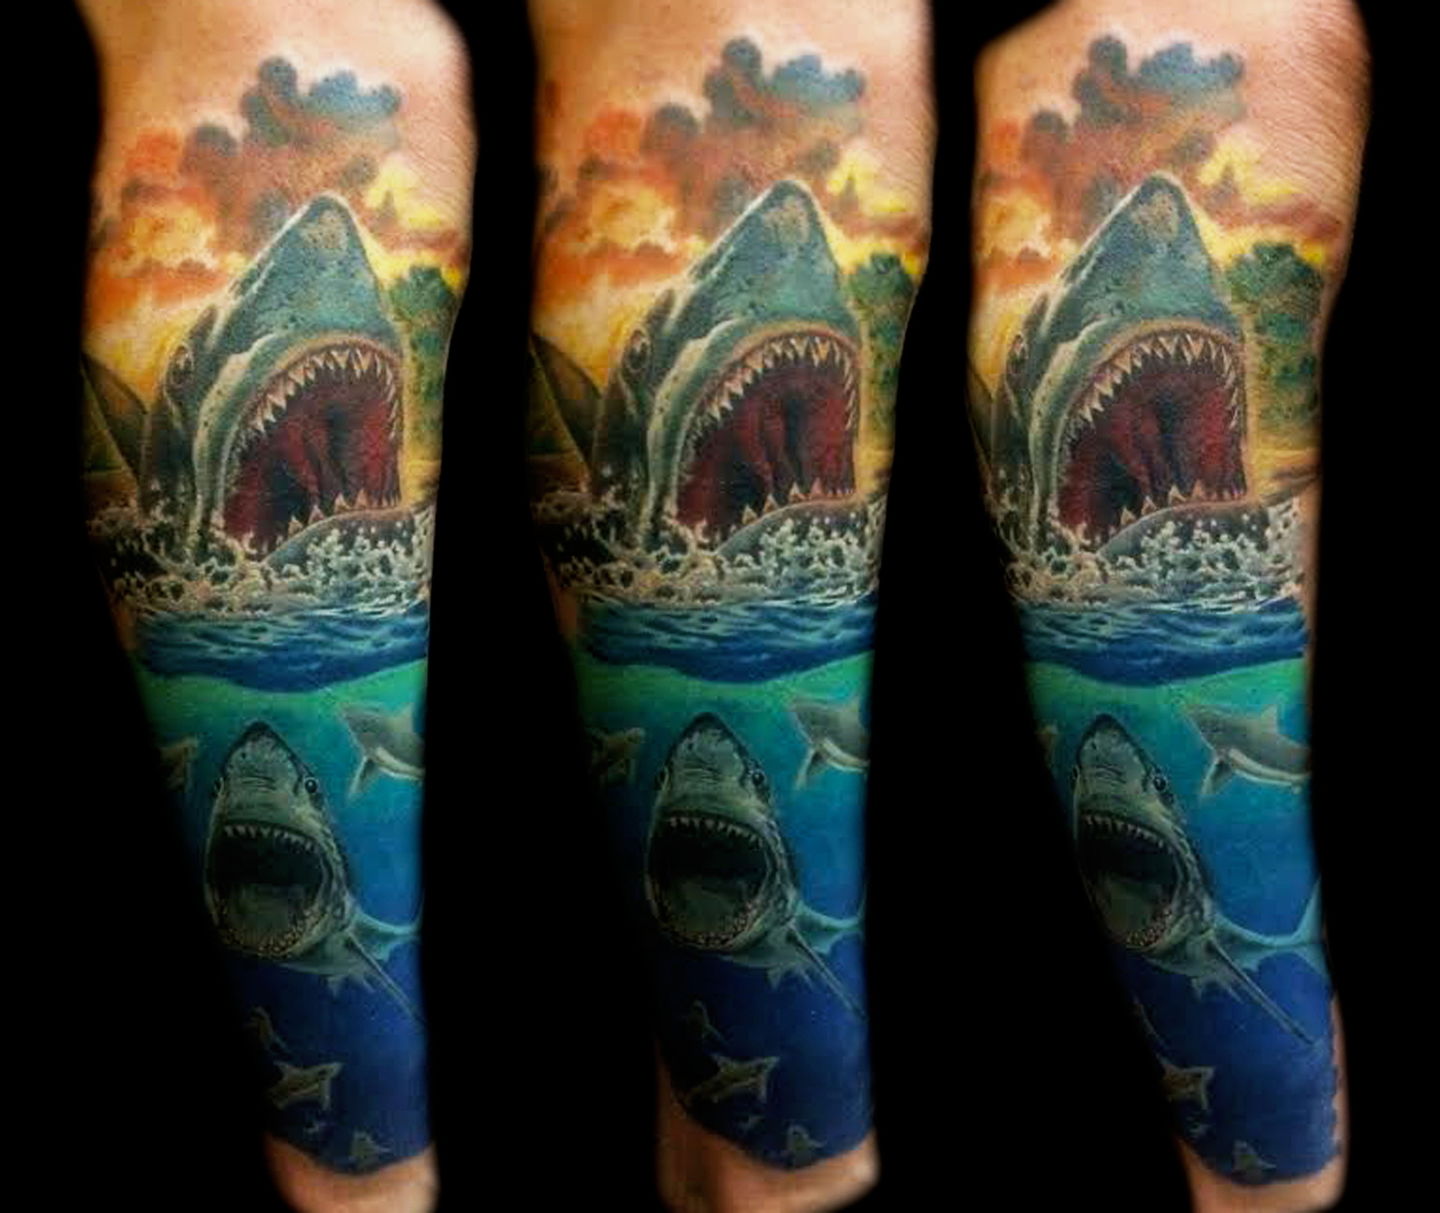 Las-vegas-tattoo-artist_joe-riley_color-shark-tattoo